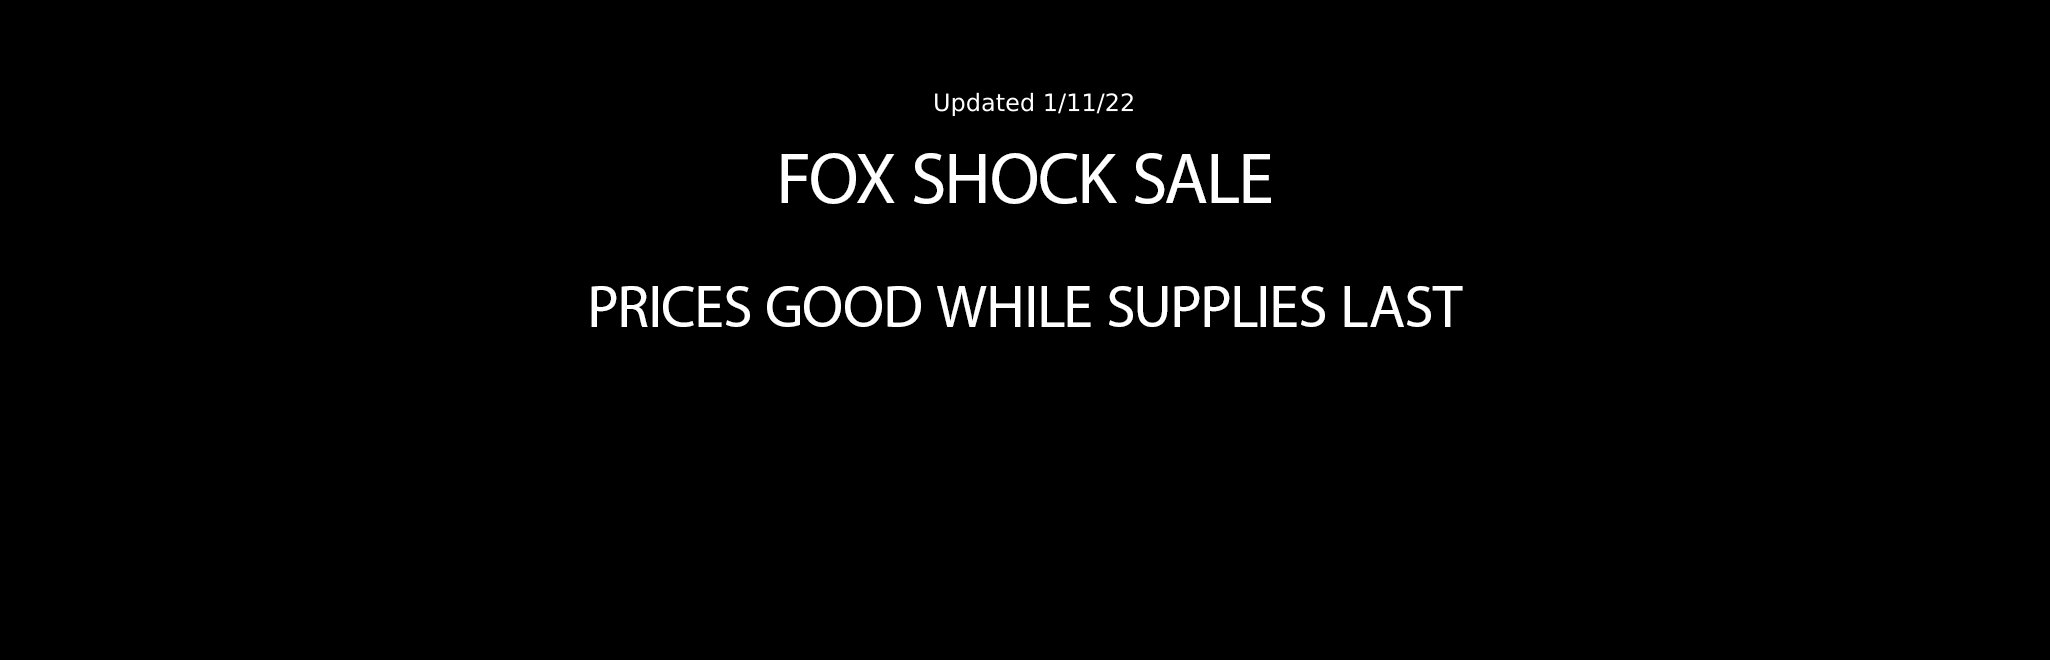 Fox Shock Sale